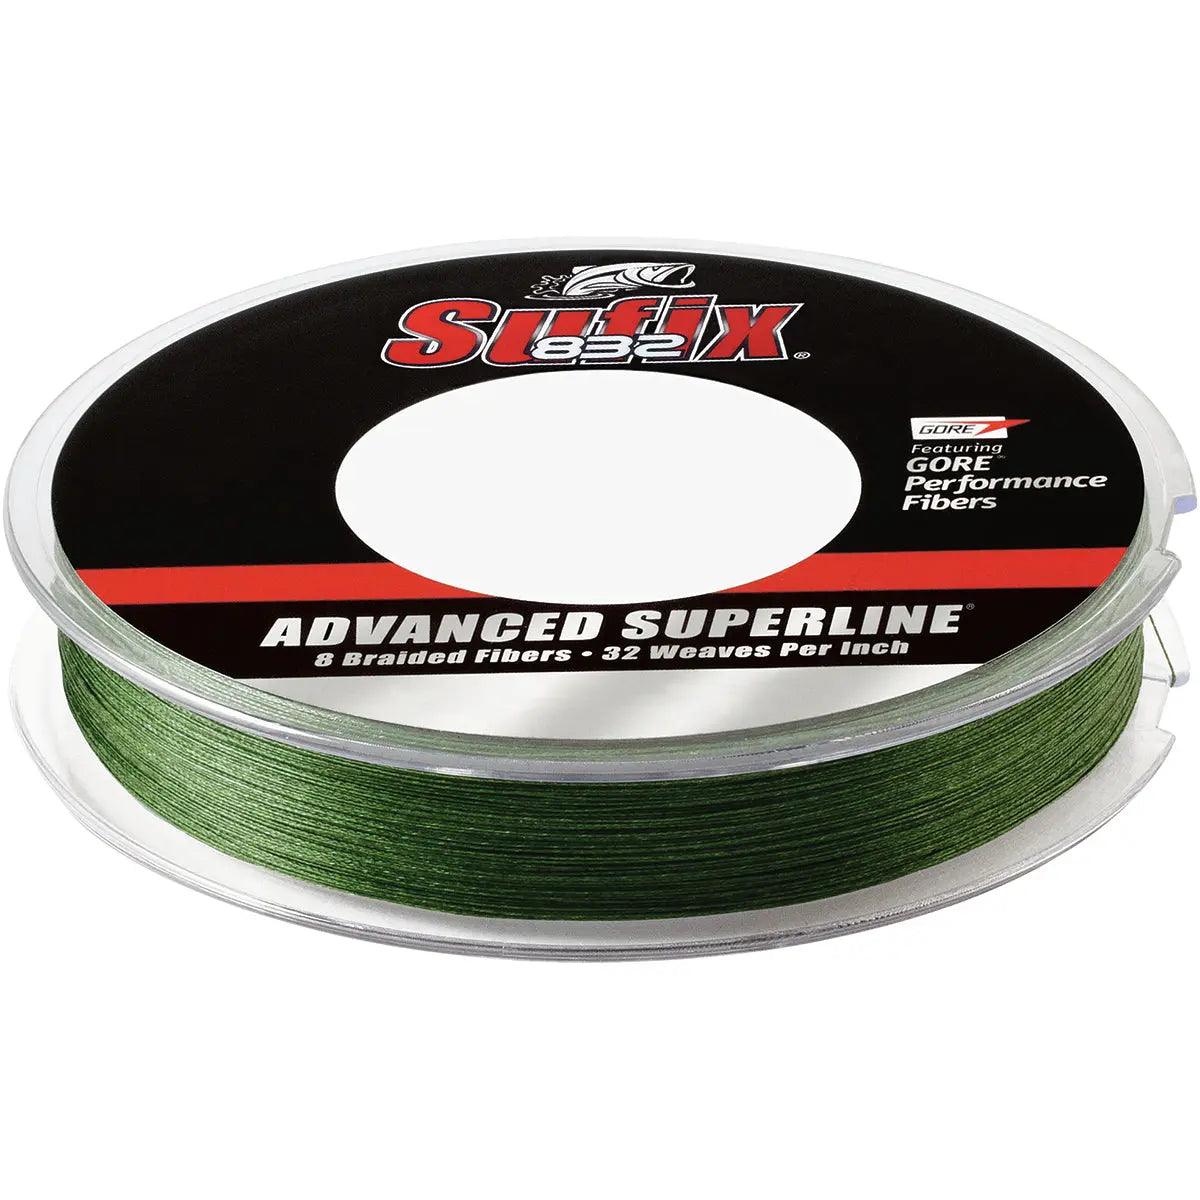 Sufix 300 Yard 832 Advanced Superline Braid Fishing Line - 30 lb. - Low-Vis Green Sufix